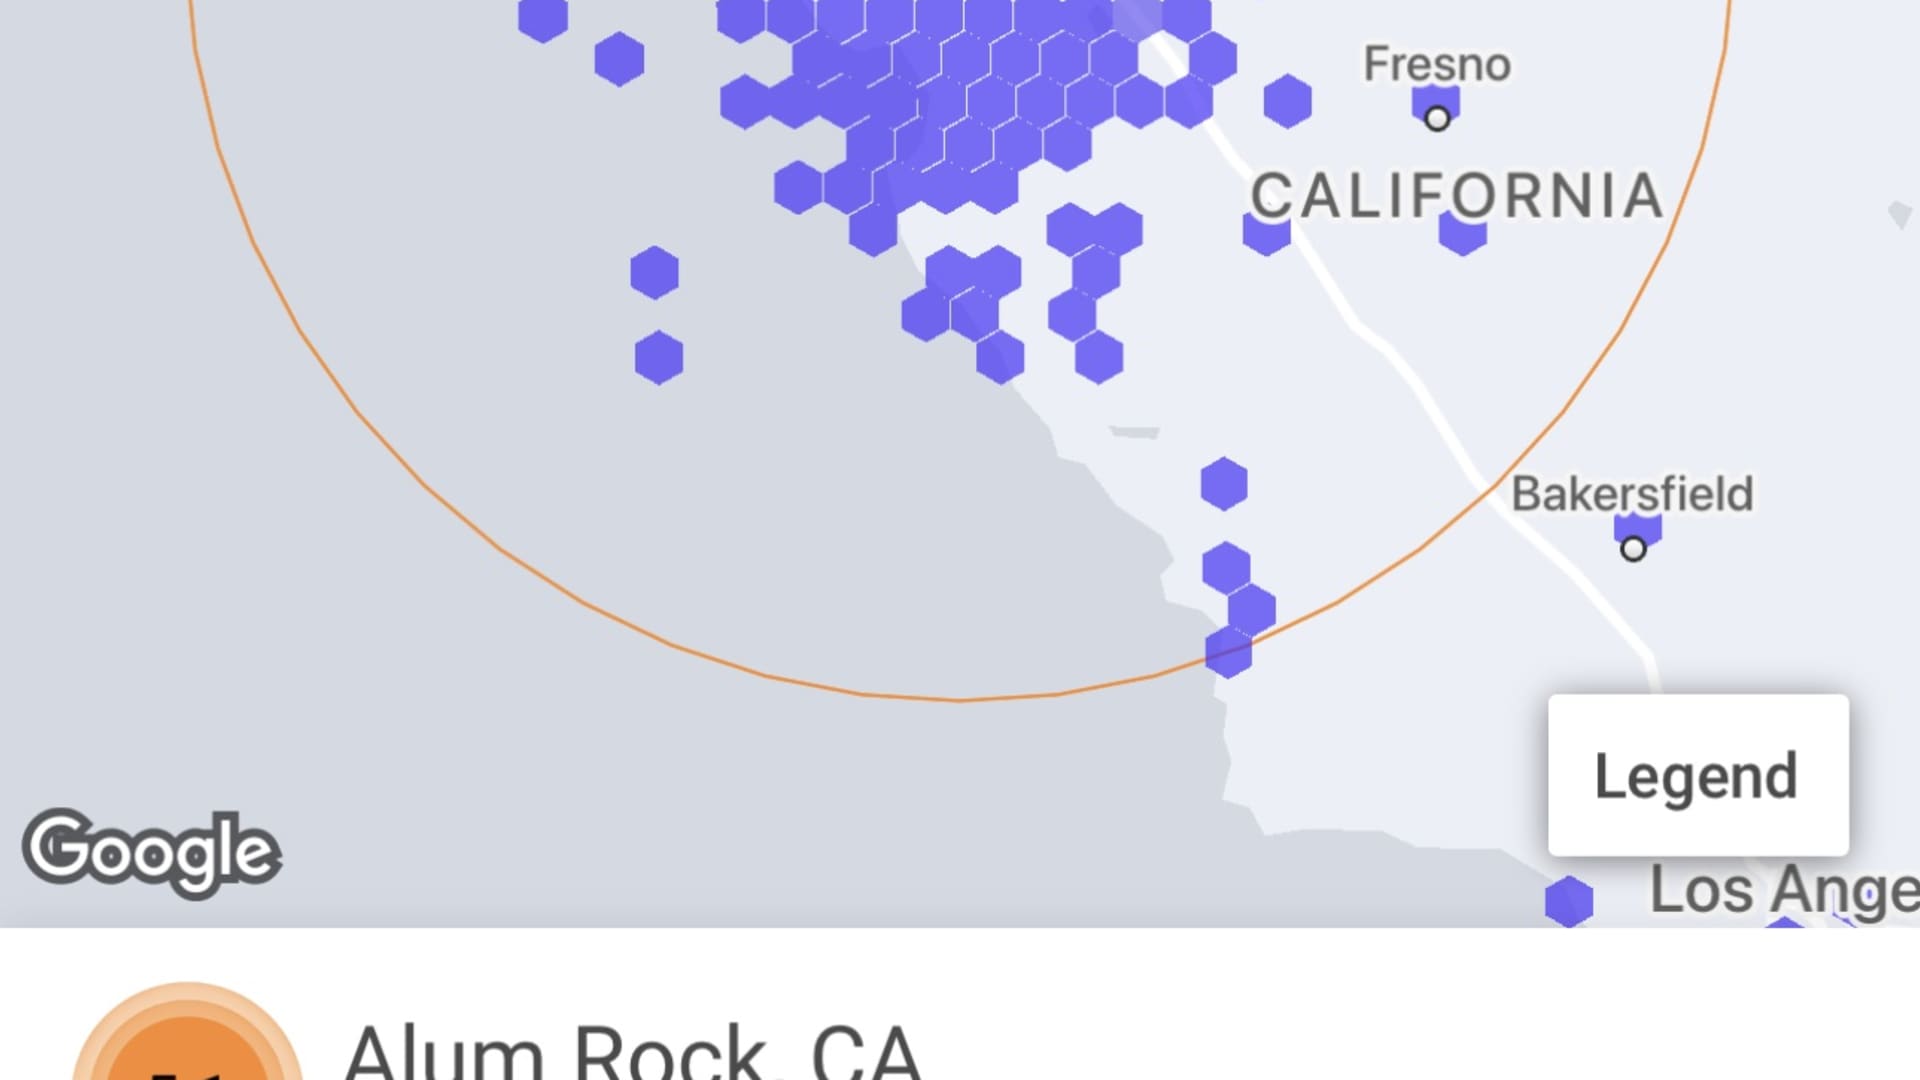 MyShake App detecting the magnitude 5.1 earthquake in California's Bay Area.